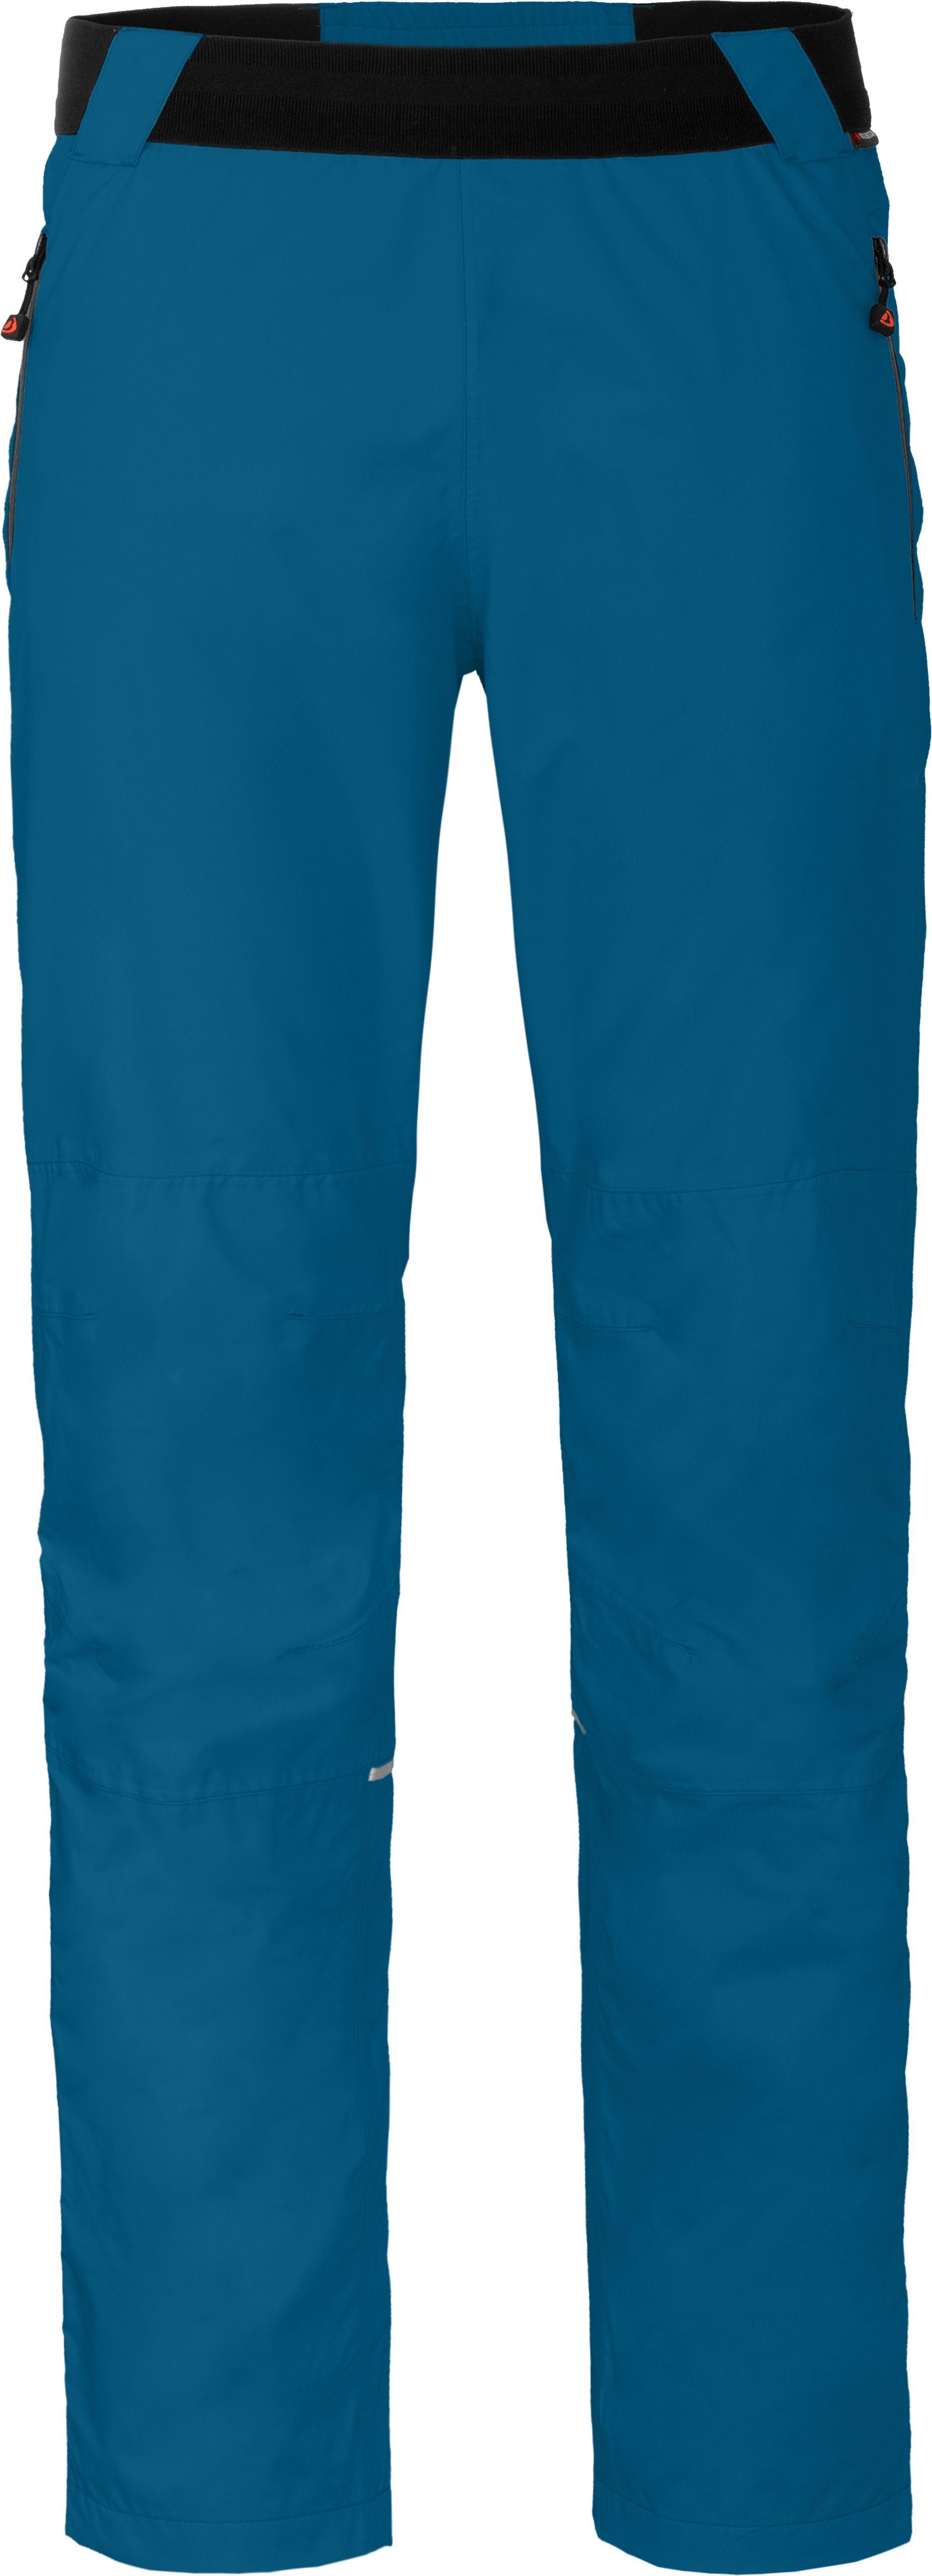 Bergson Regenhose VARKAUS COMFORT Herren (Über) Regenhose, Überhose, Netzfutter, 12000 mm Wassersäule, Langgrößen, Saphir blau